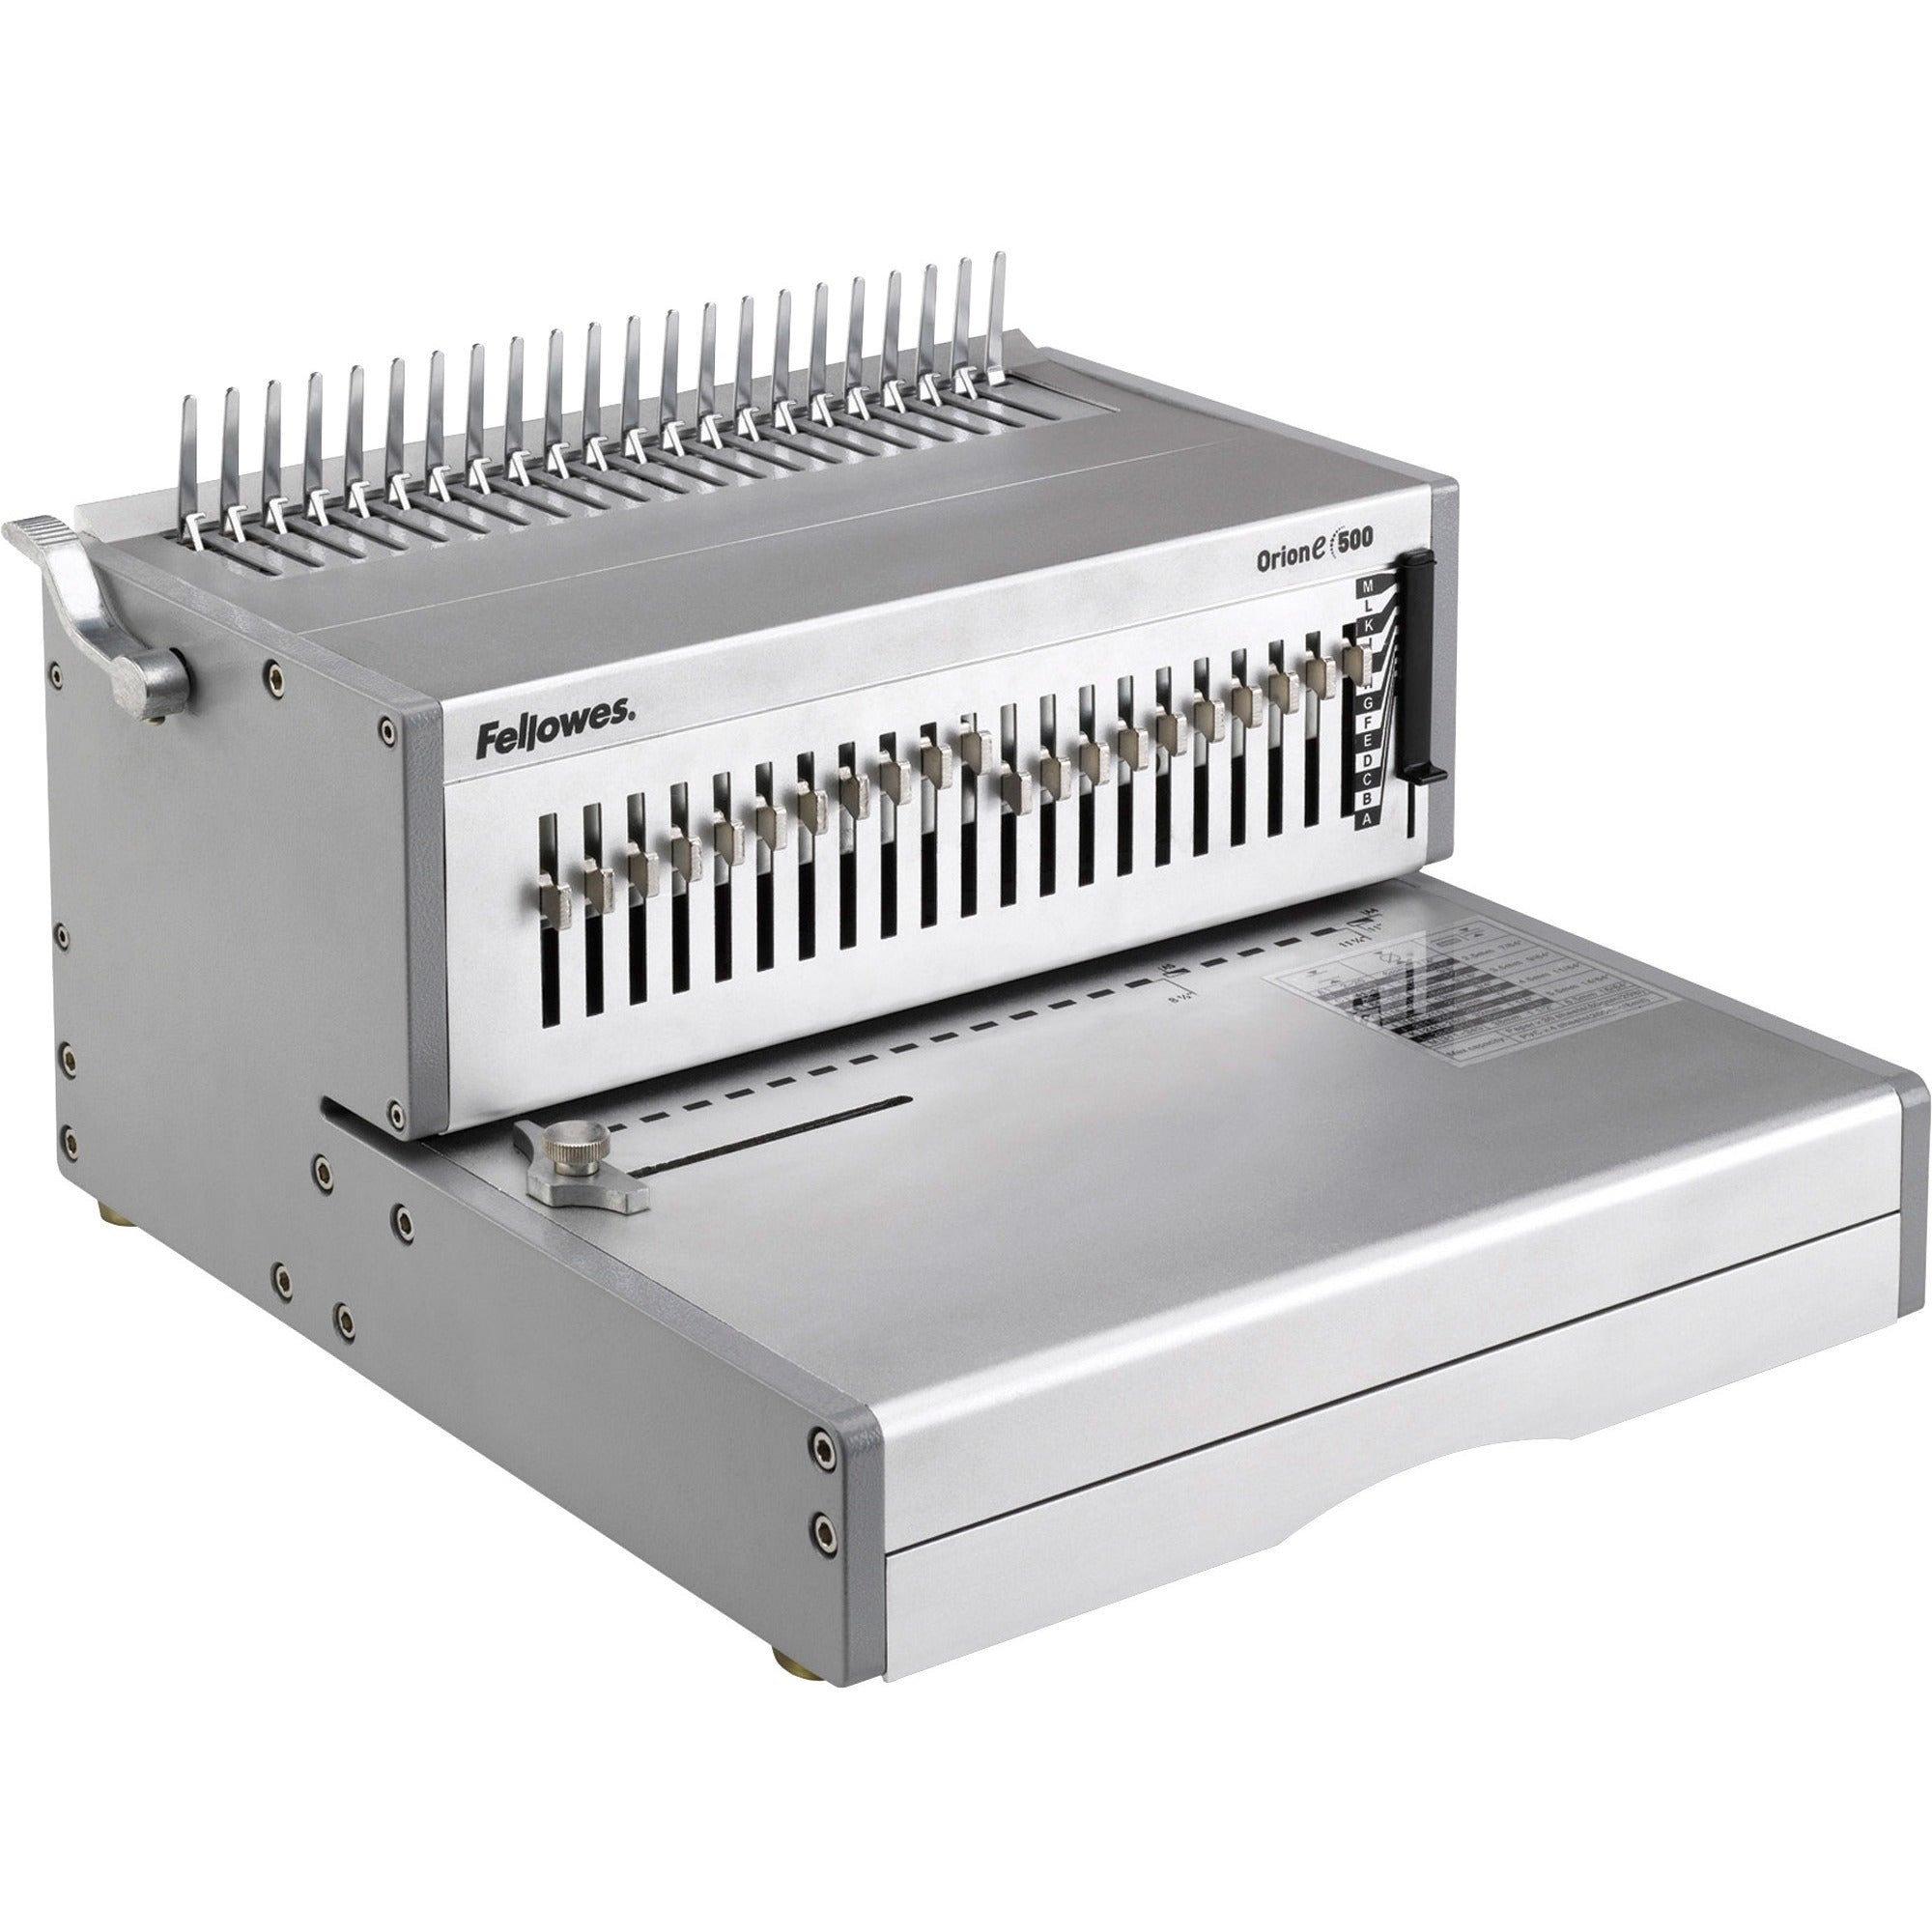 Fellowes Orion E 500 Electric Comb Binding Machine - 9.8" x 15.8" x 19.8" - Silver - 